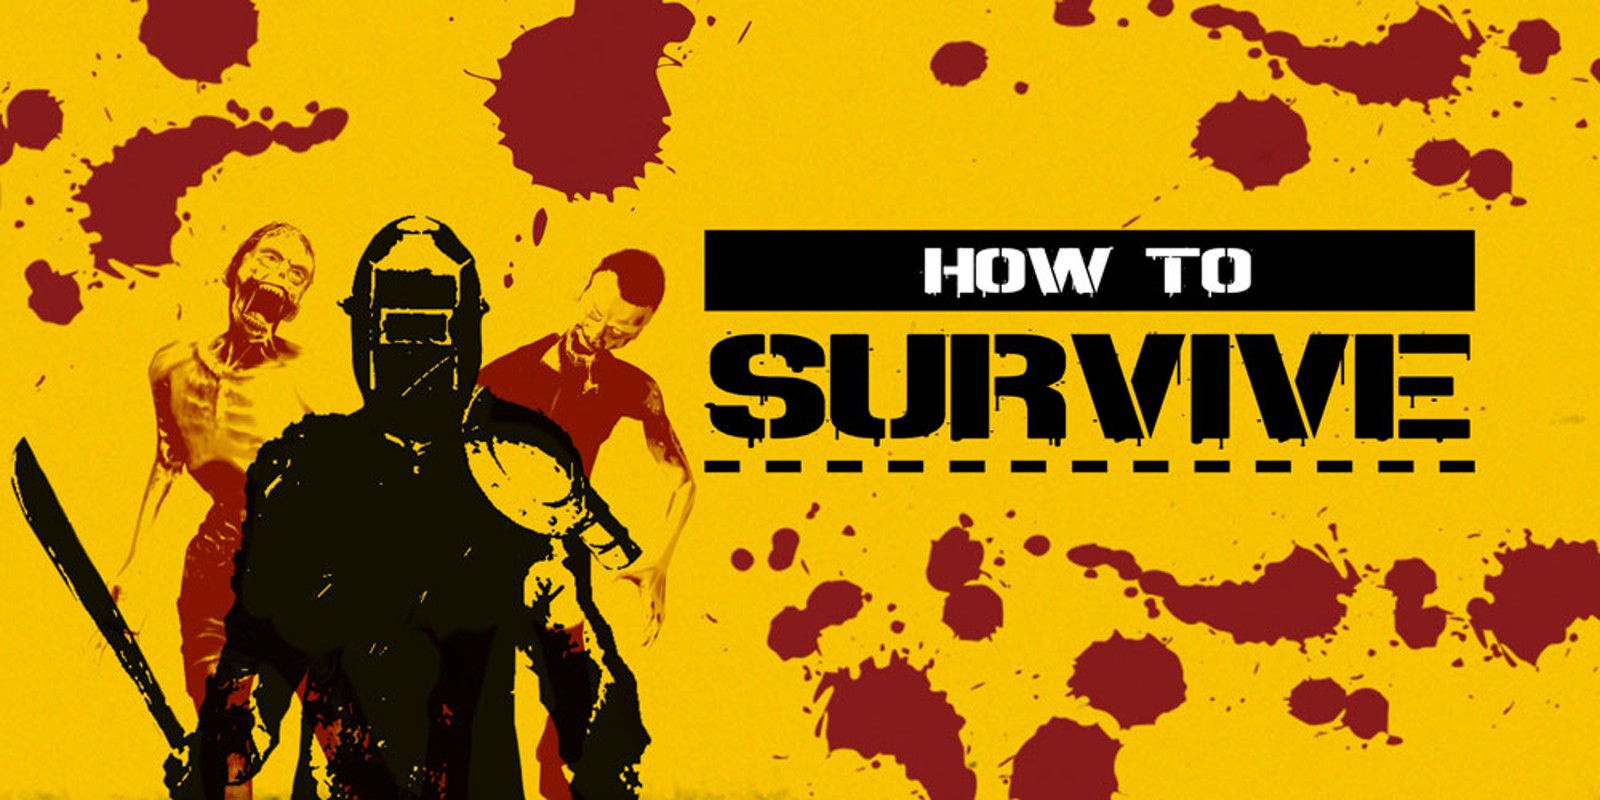 How To Survive | Wii U download software | Games | Nintendo